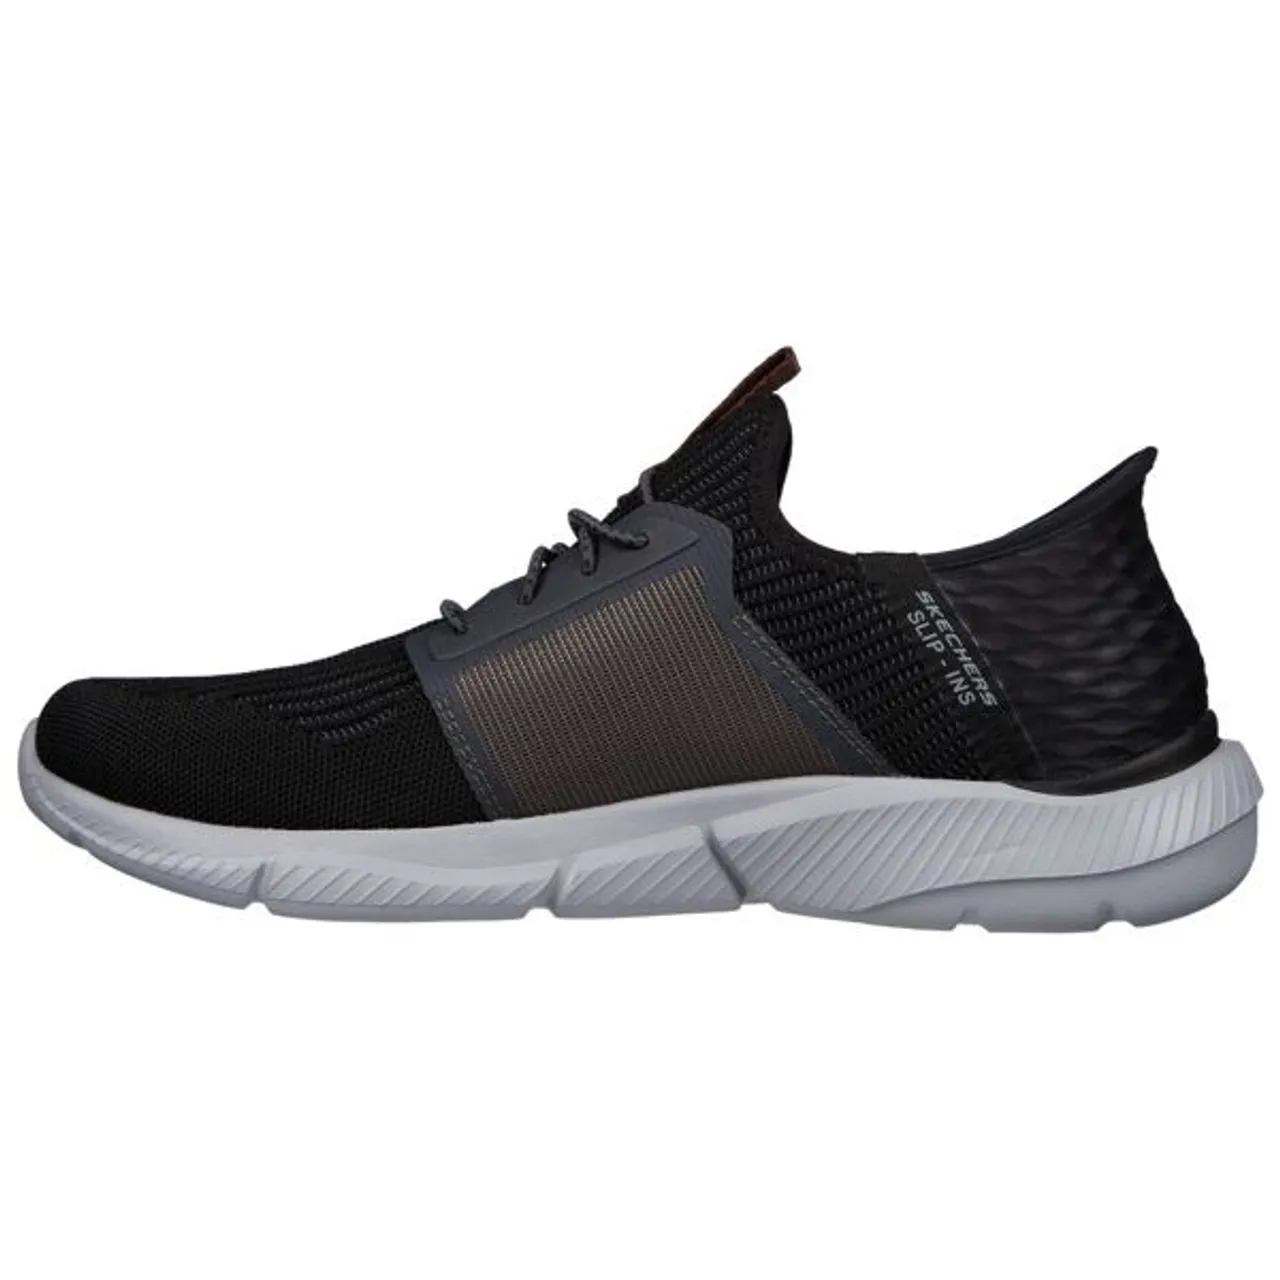 Slip-On Sneaker SKECHERS "INGRAM-BRACKETT" Gr. 40, schwarz (schwarz, grau) Herren Schuhe Stoffschuhe